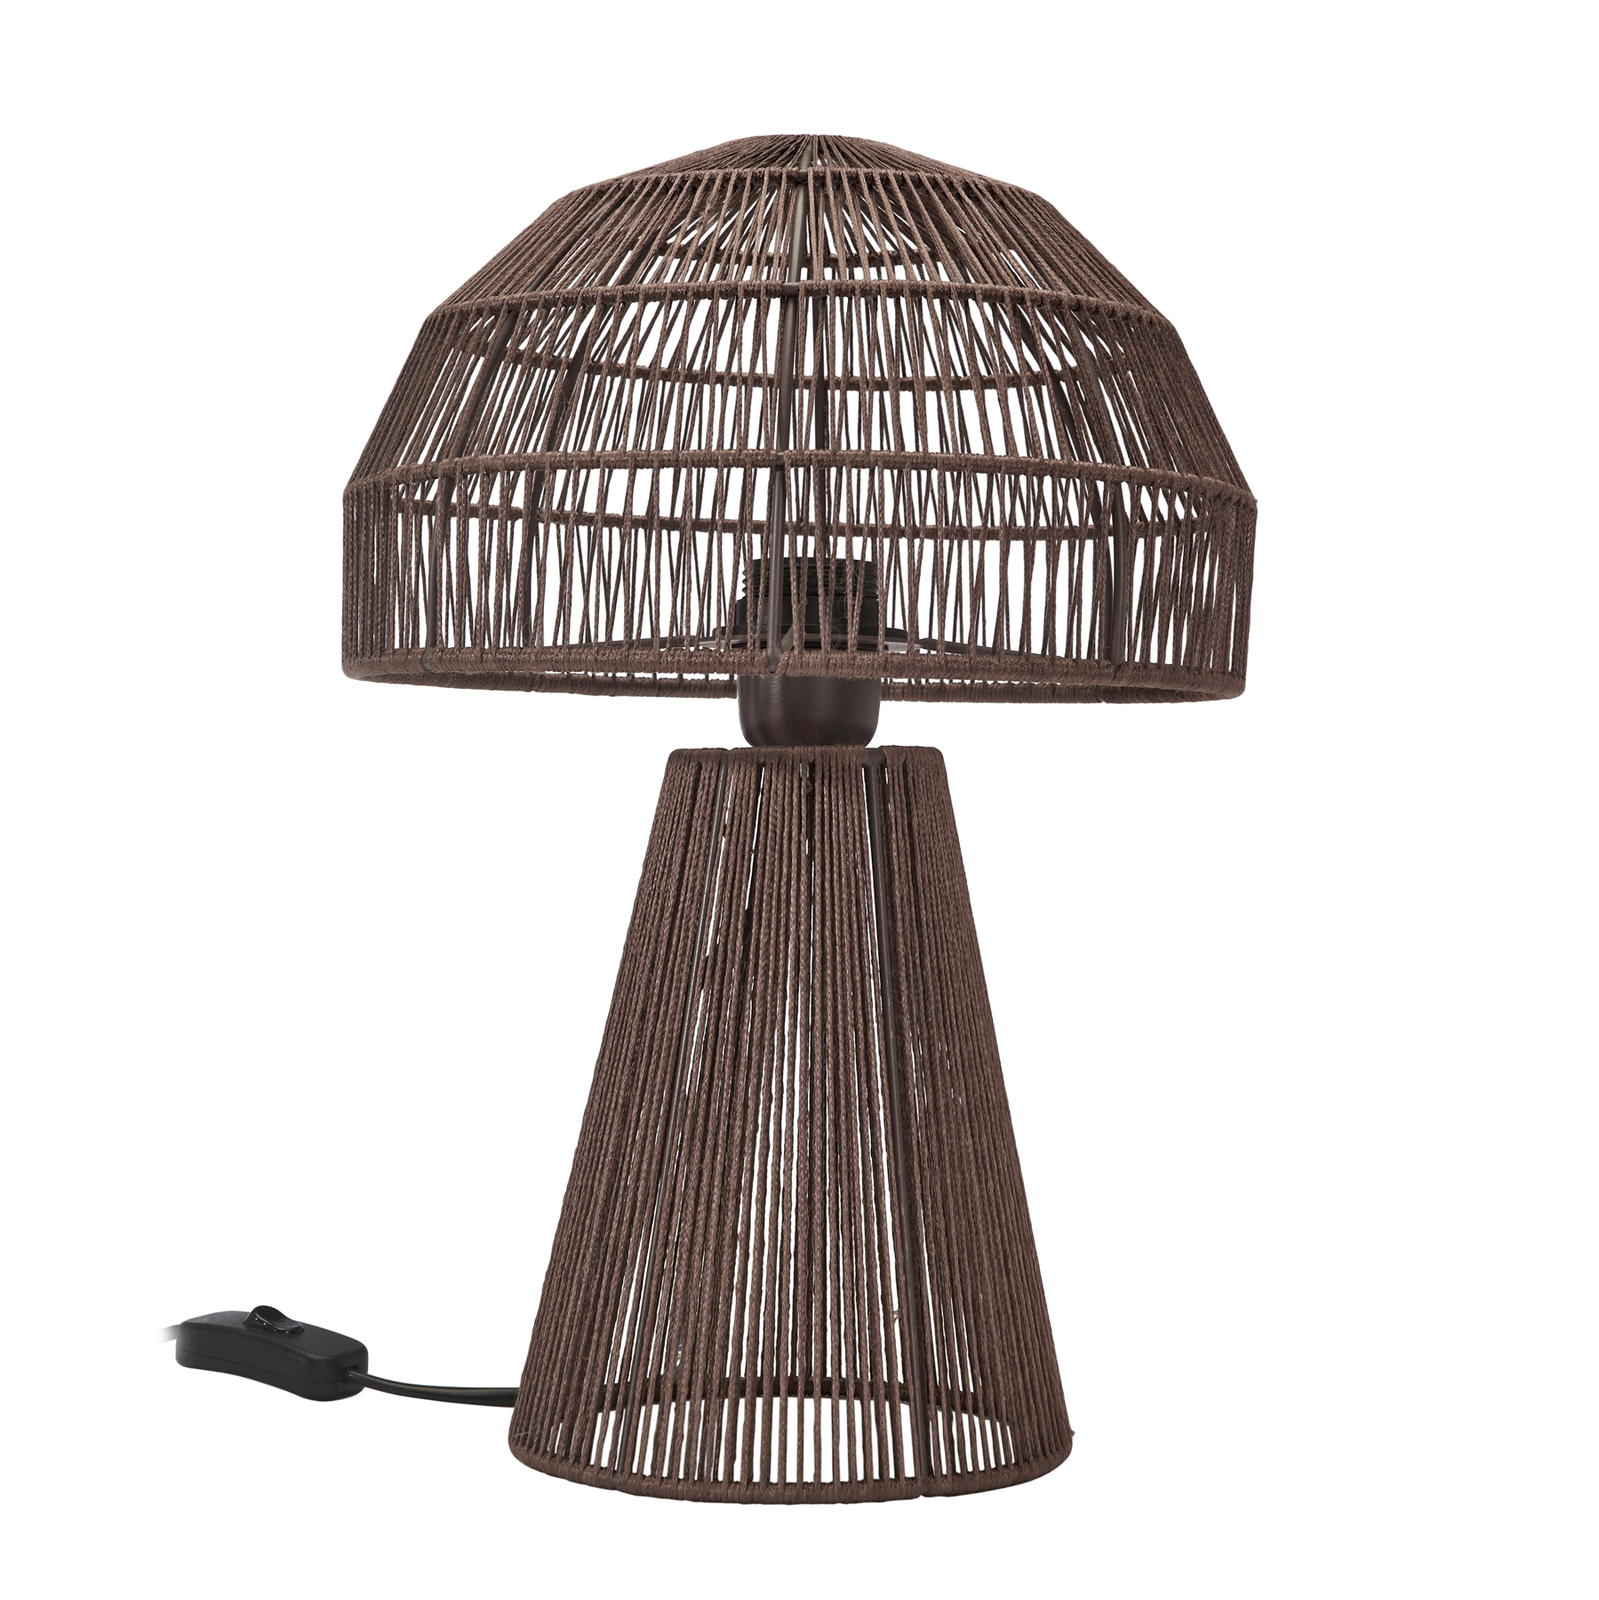 PR Home Porcini asztali lámpa 37cm magas, barna